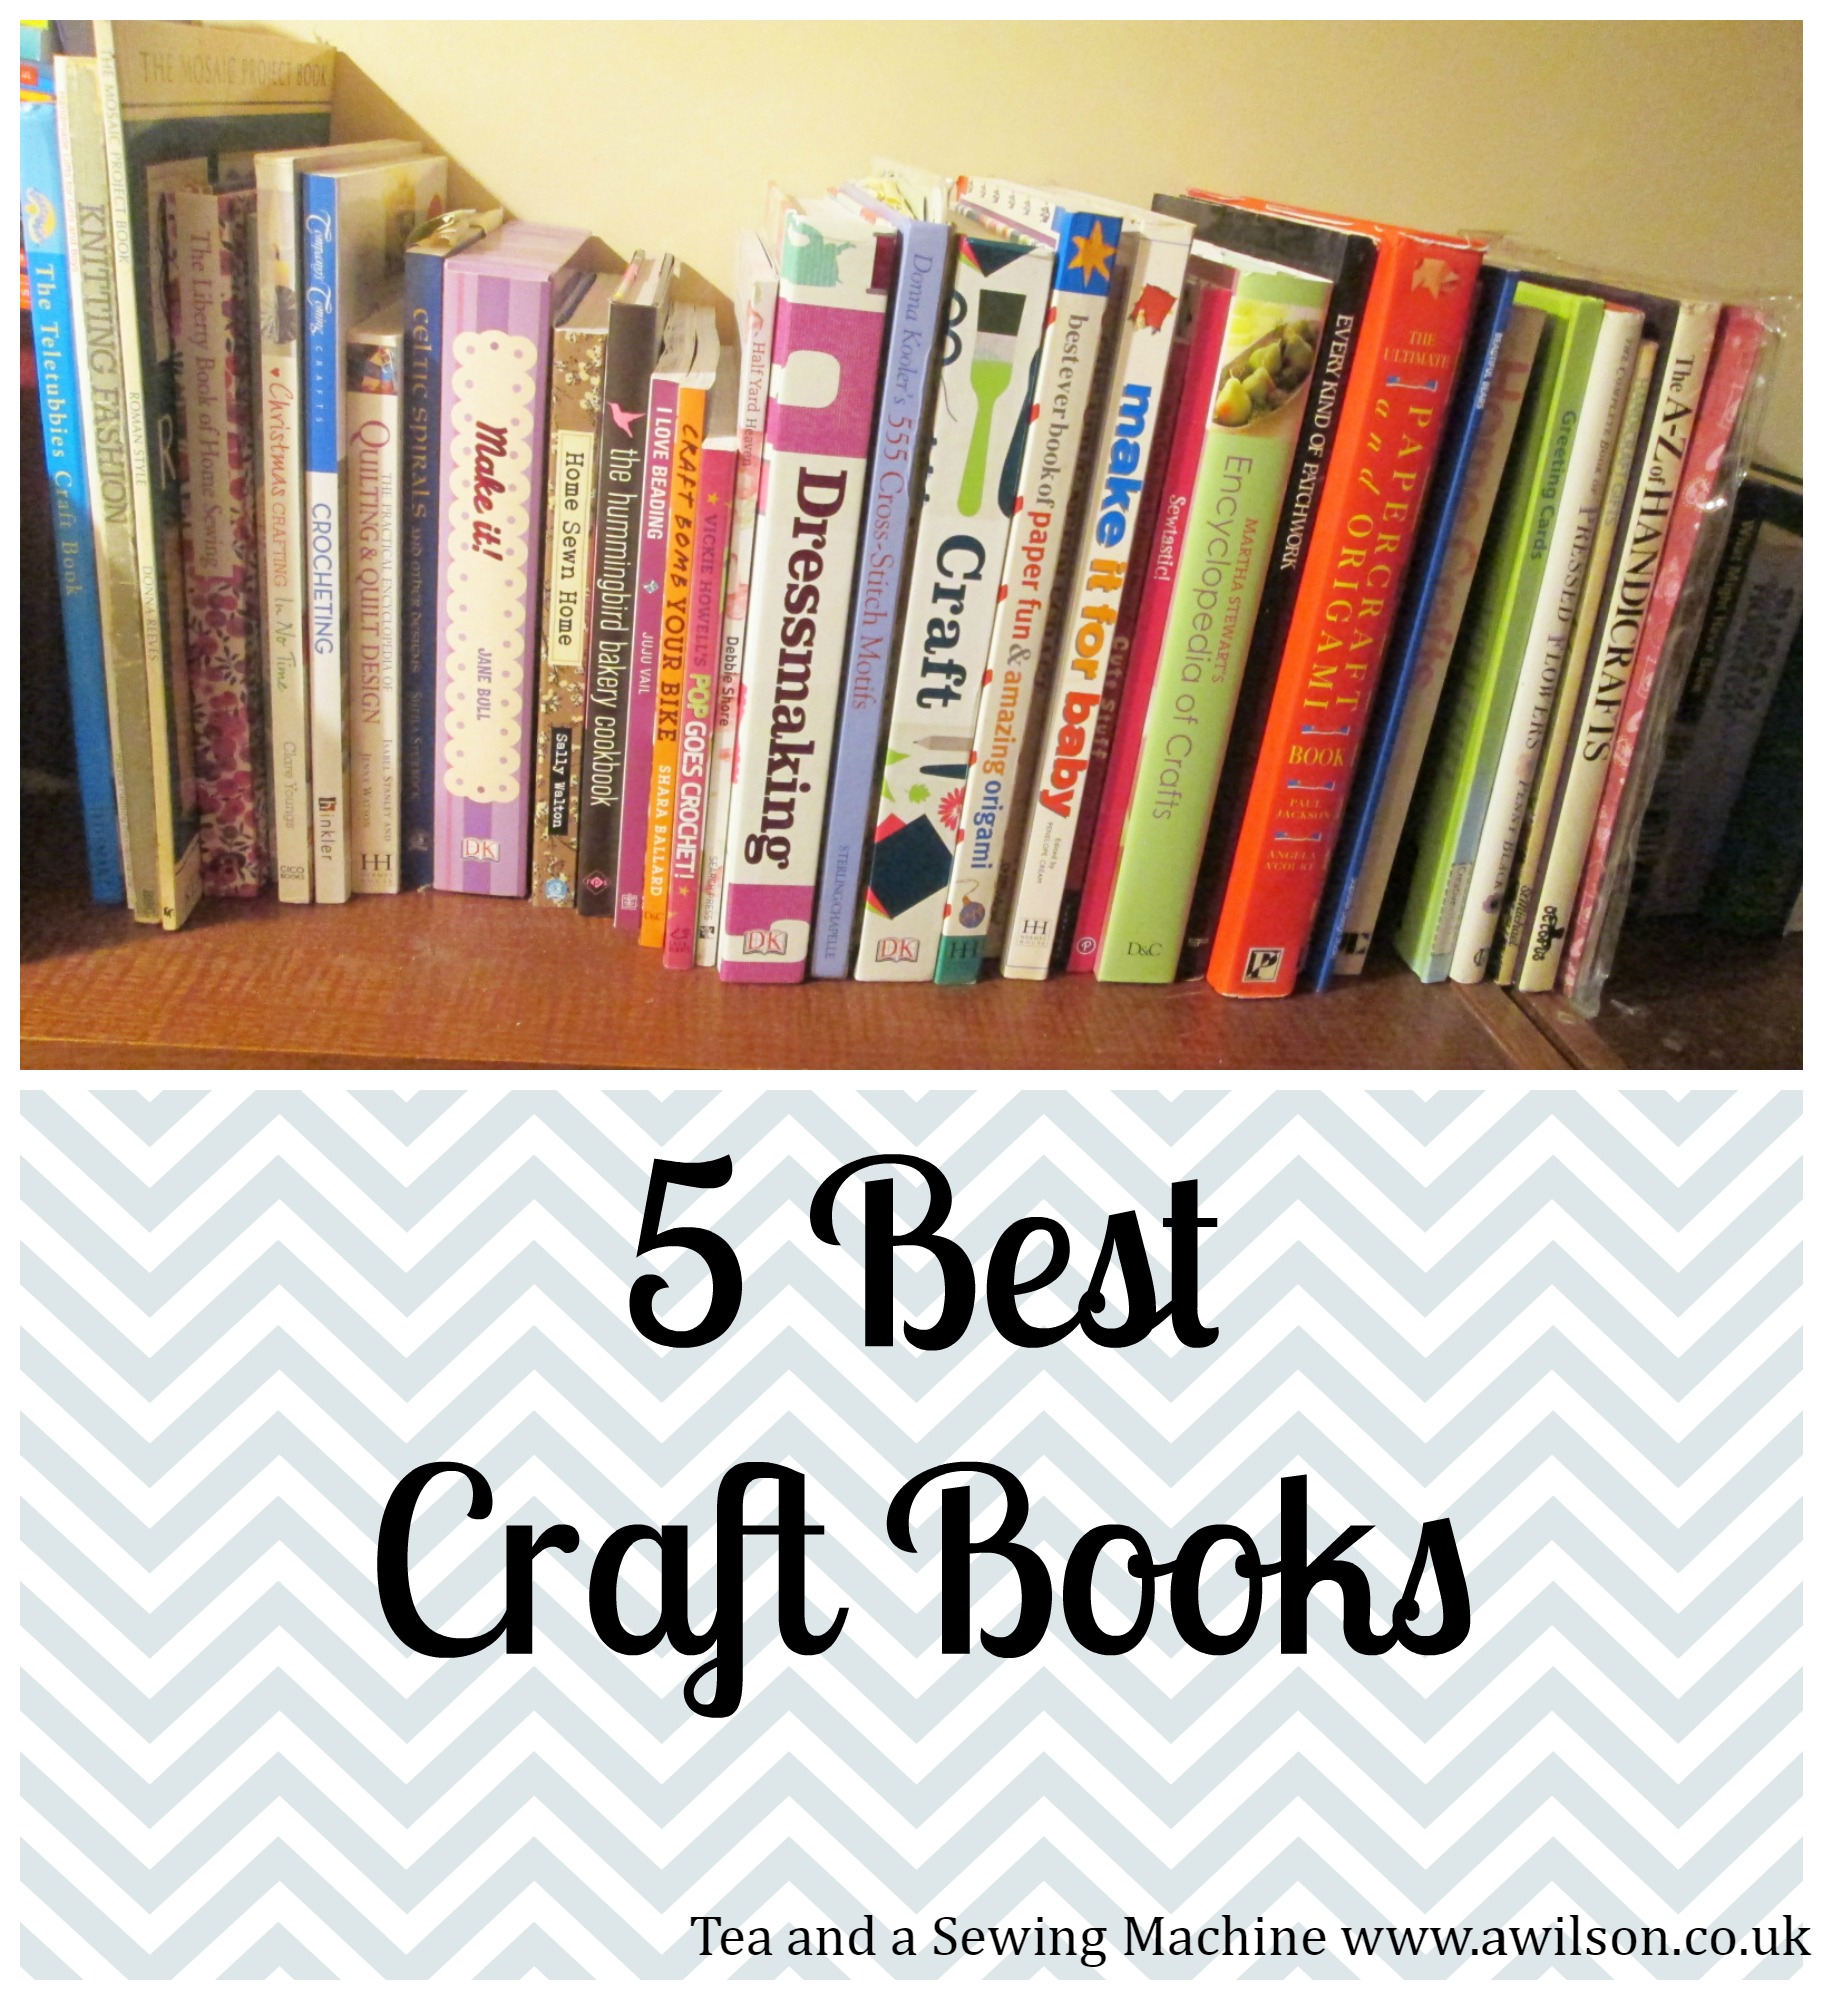 5 Best Craft Books... - Tea and a Sewing Machine